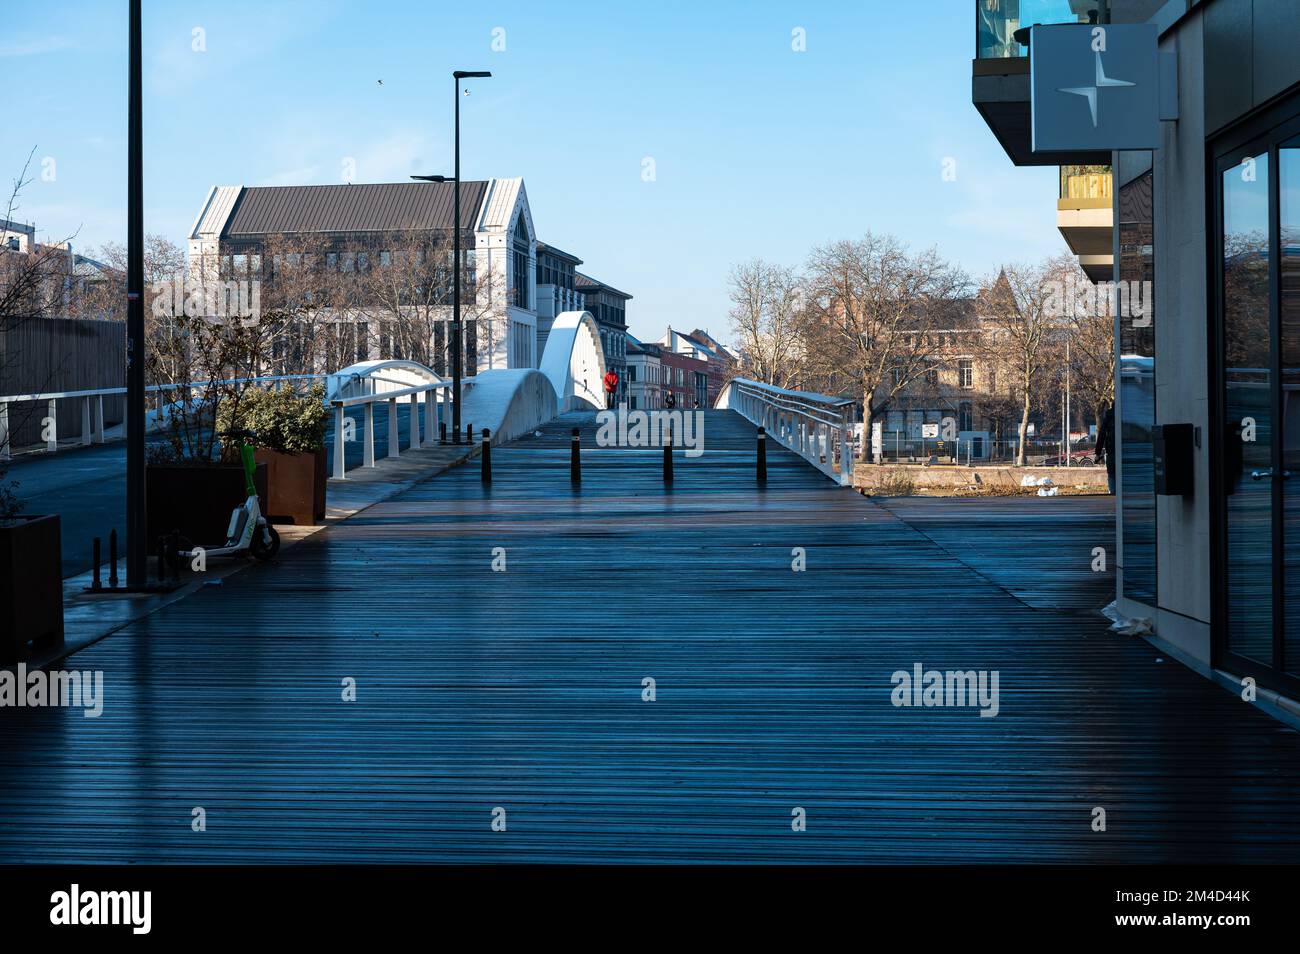 Molenbeek, Brussels Capital Region, Belgium - 12 17 2022 - The new Suzan Daniel bridge with a wooden pedestrian passway Stock Photo